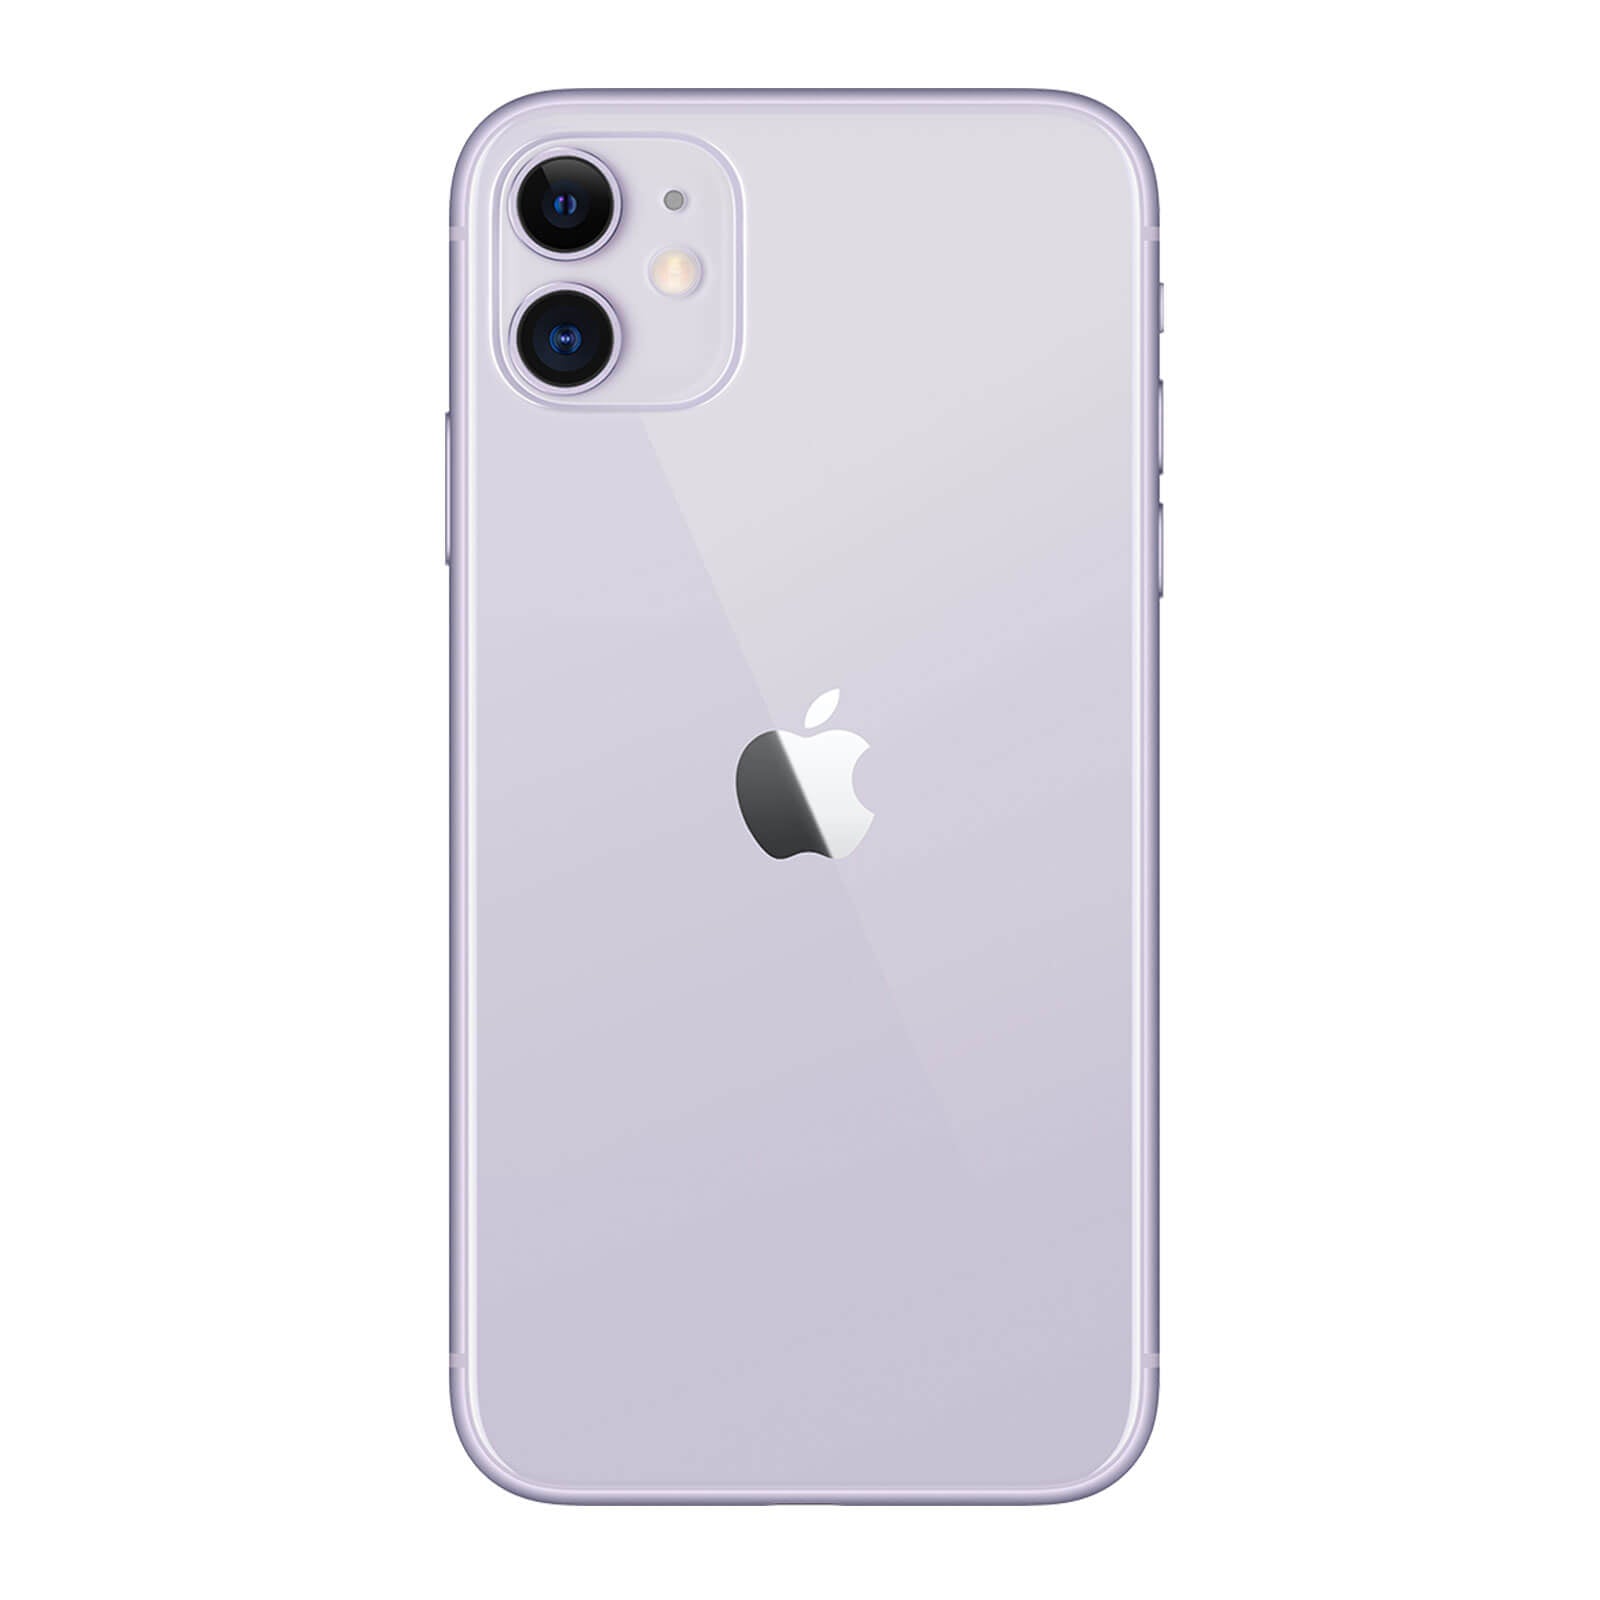 Apple iPhone 11 256GB Purple Fair - Verizon